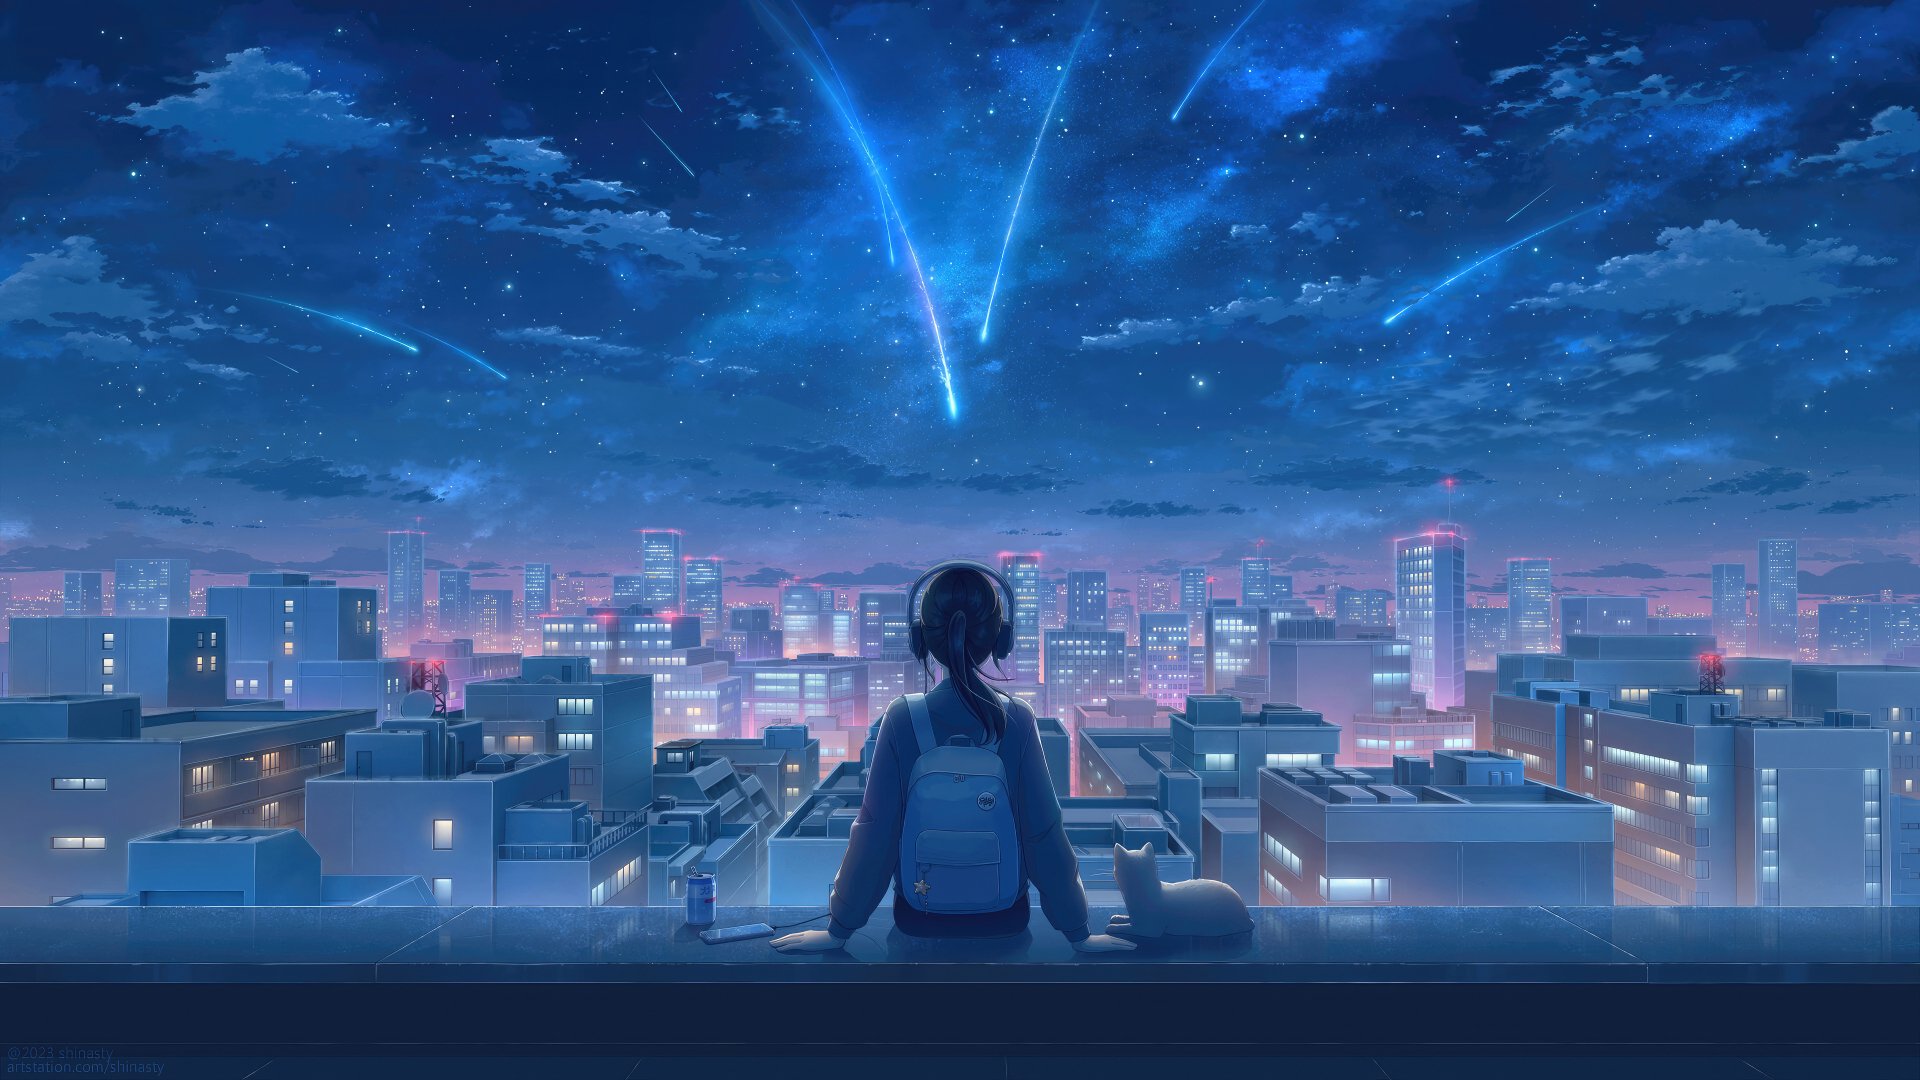 Beautiful anime sunrise scenery 4K wallpaper download